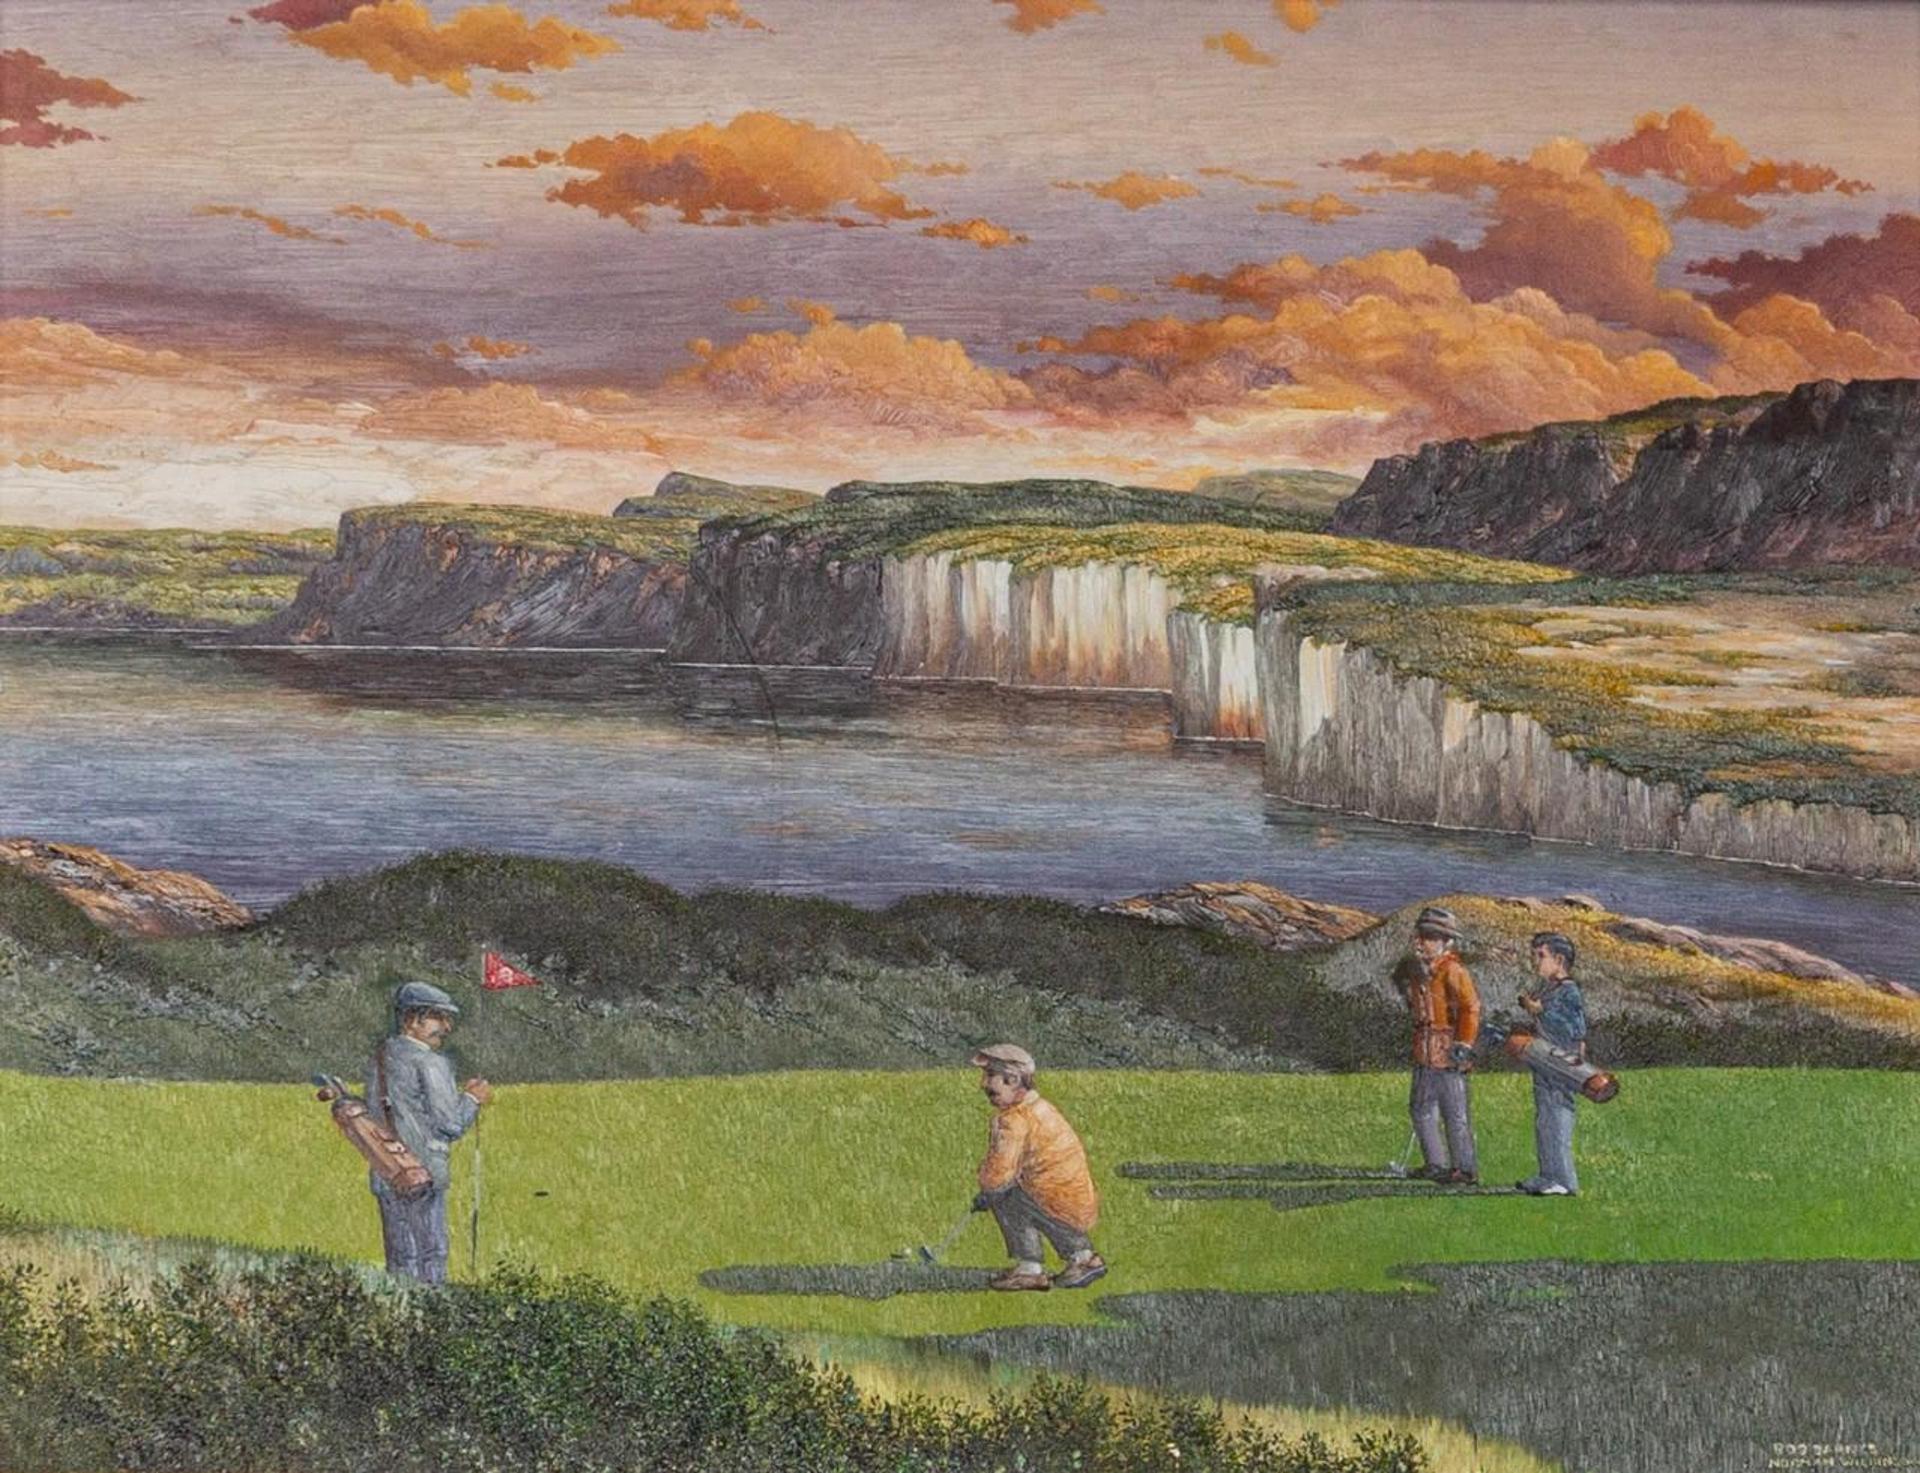 Bob Barnes (1953) - Golf in Ireland